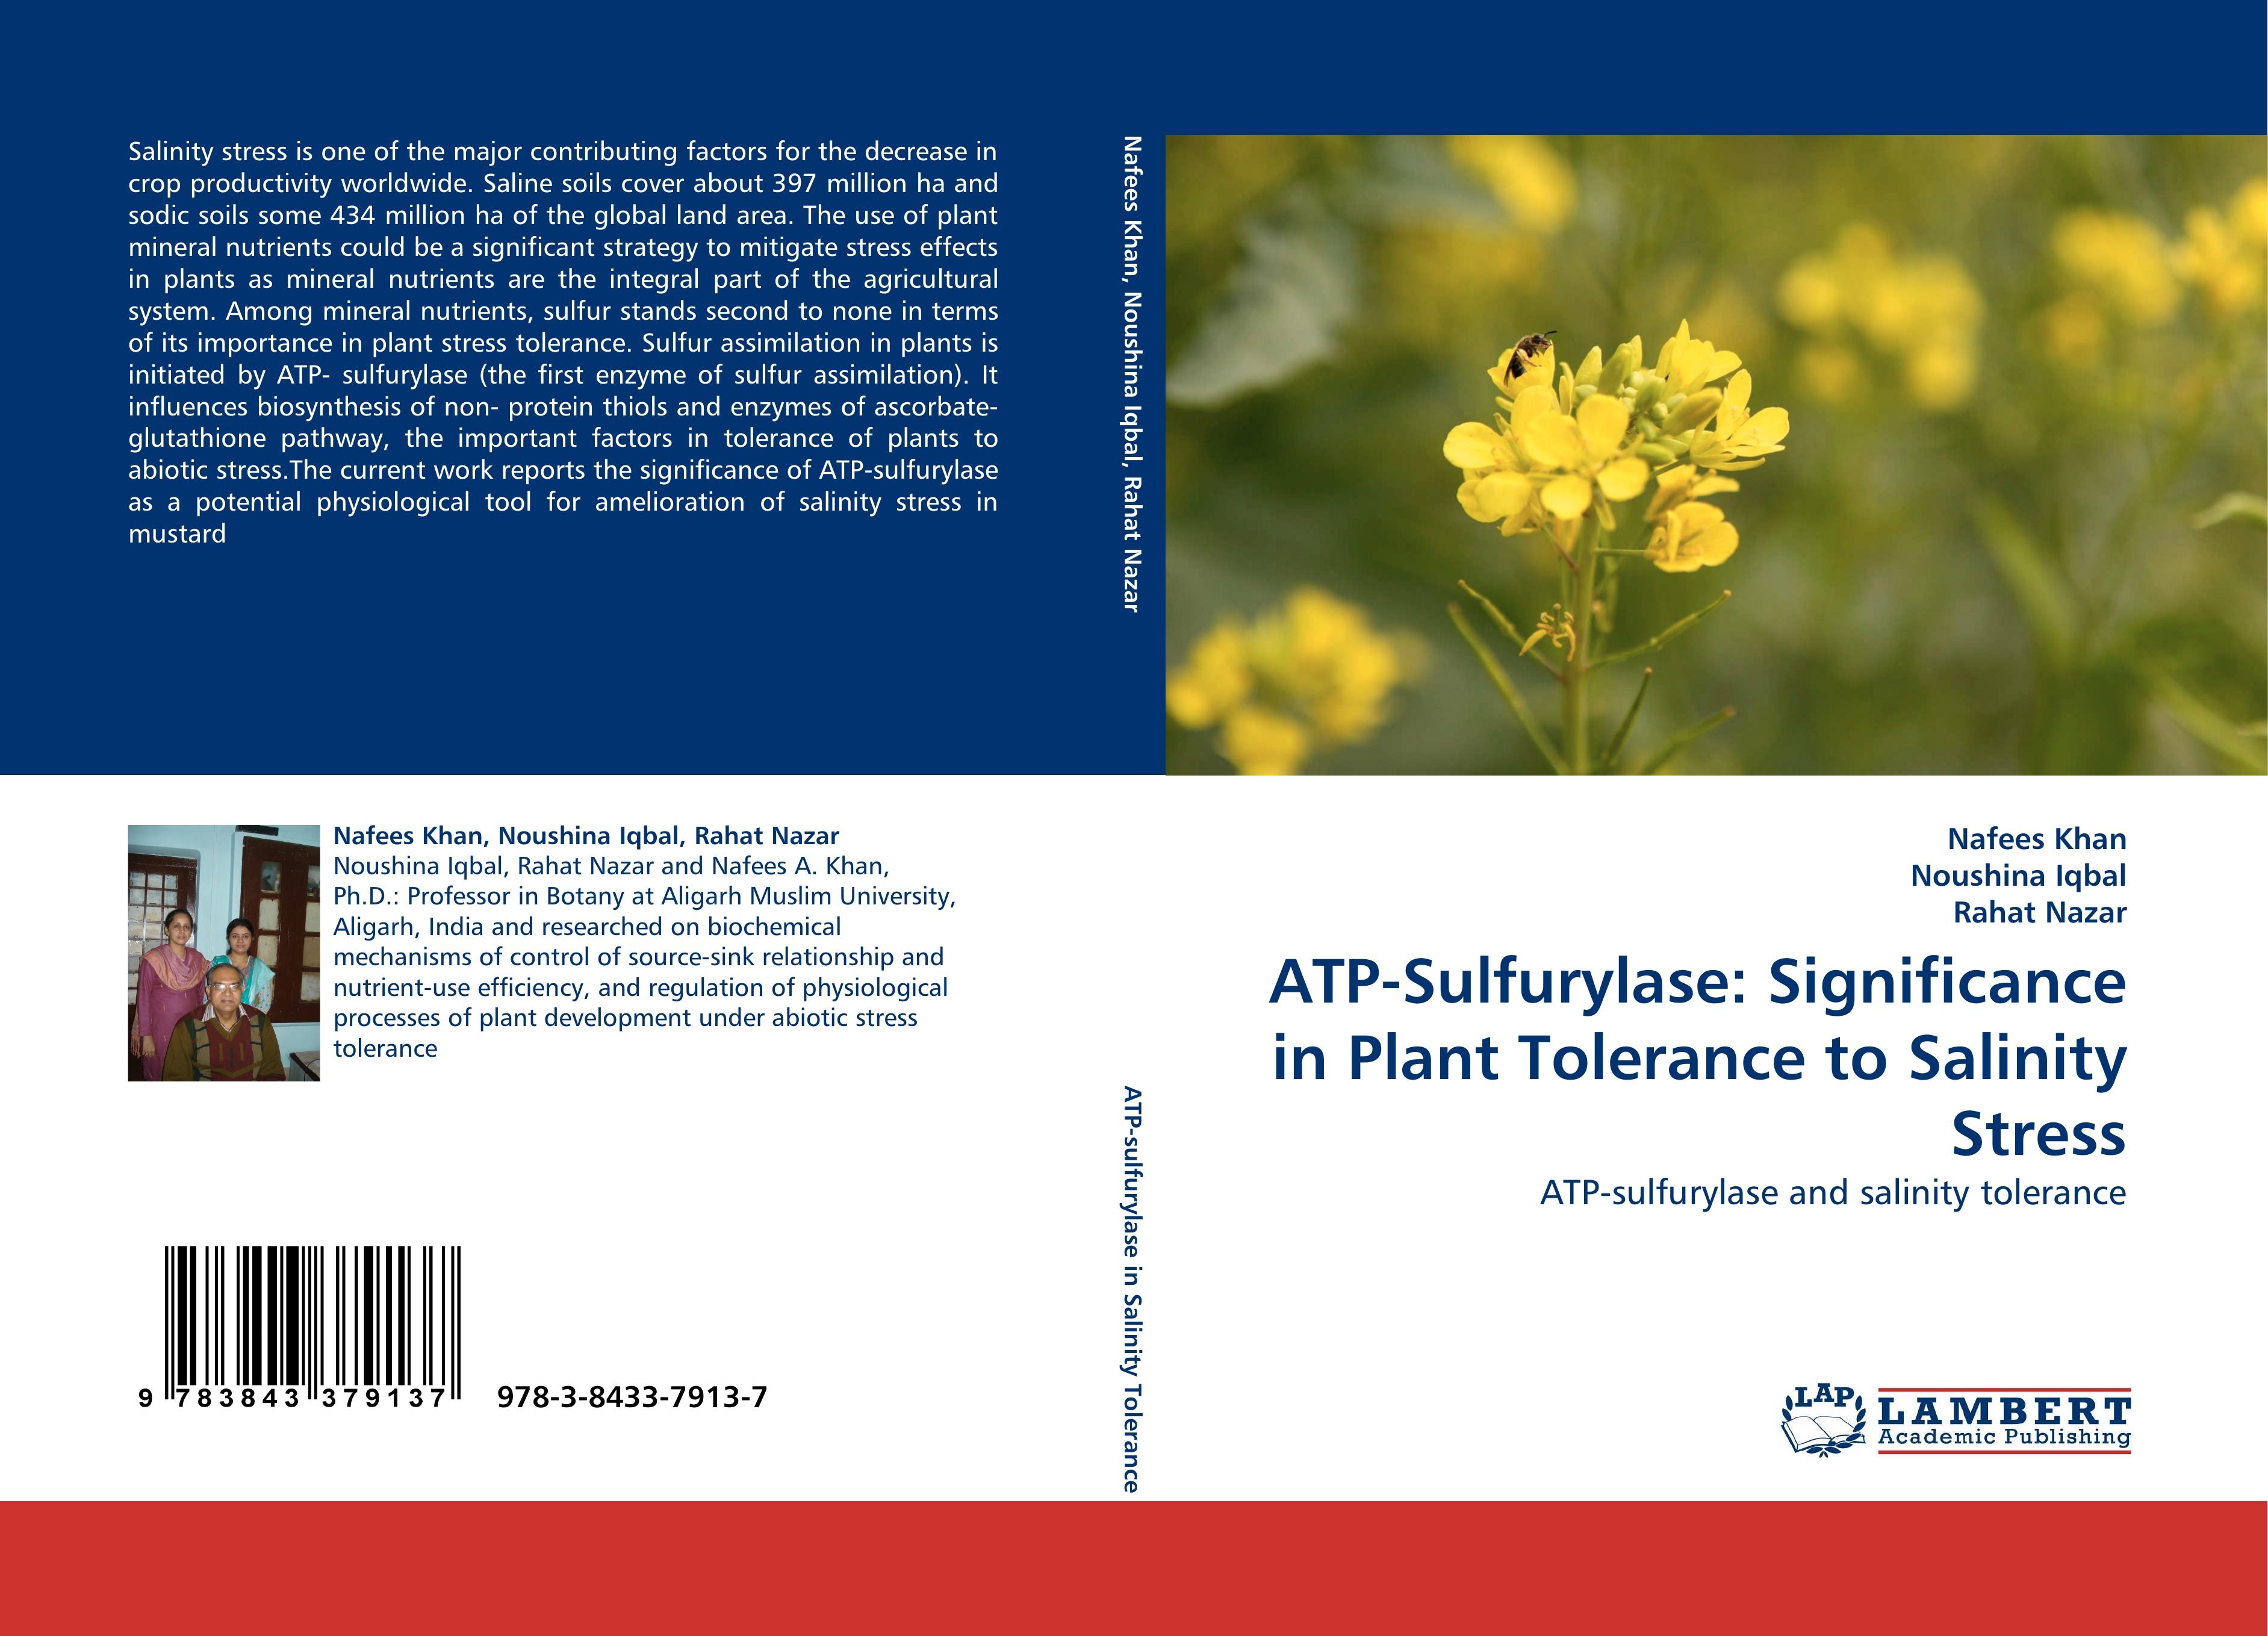 ATP-Sulfurylase: Significance in Plant Tolerance to Salinity Stress - Nafees Khan Noushina Iqbal Rahat Nazar